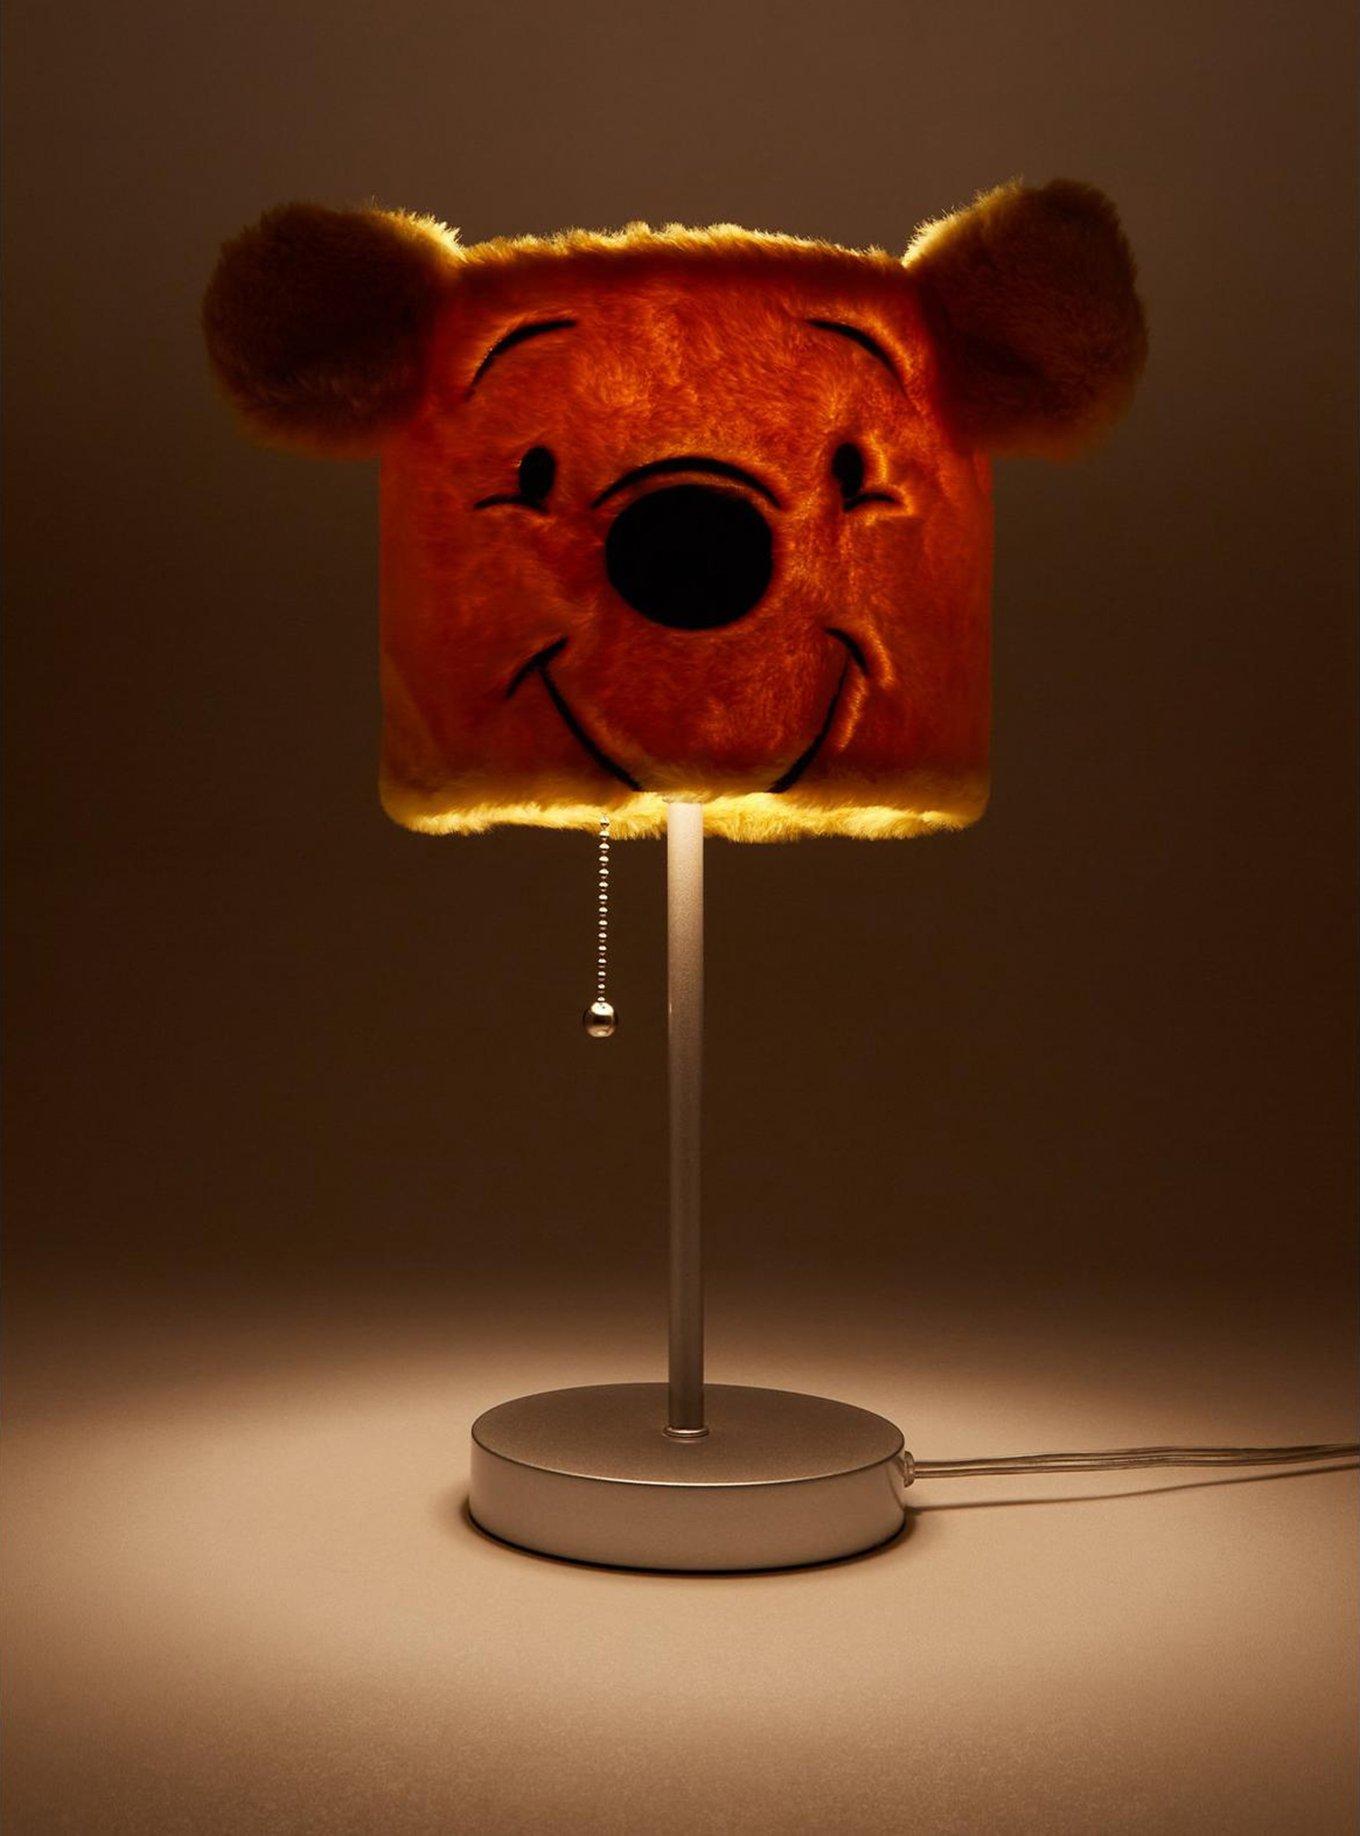 Disney Winnie the Pooh Smiling Pooh Bear Figural Table Lamp , , hi-res